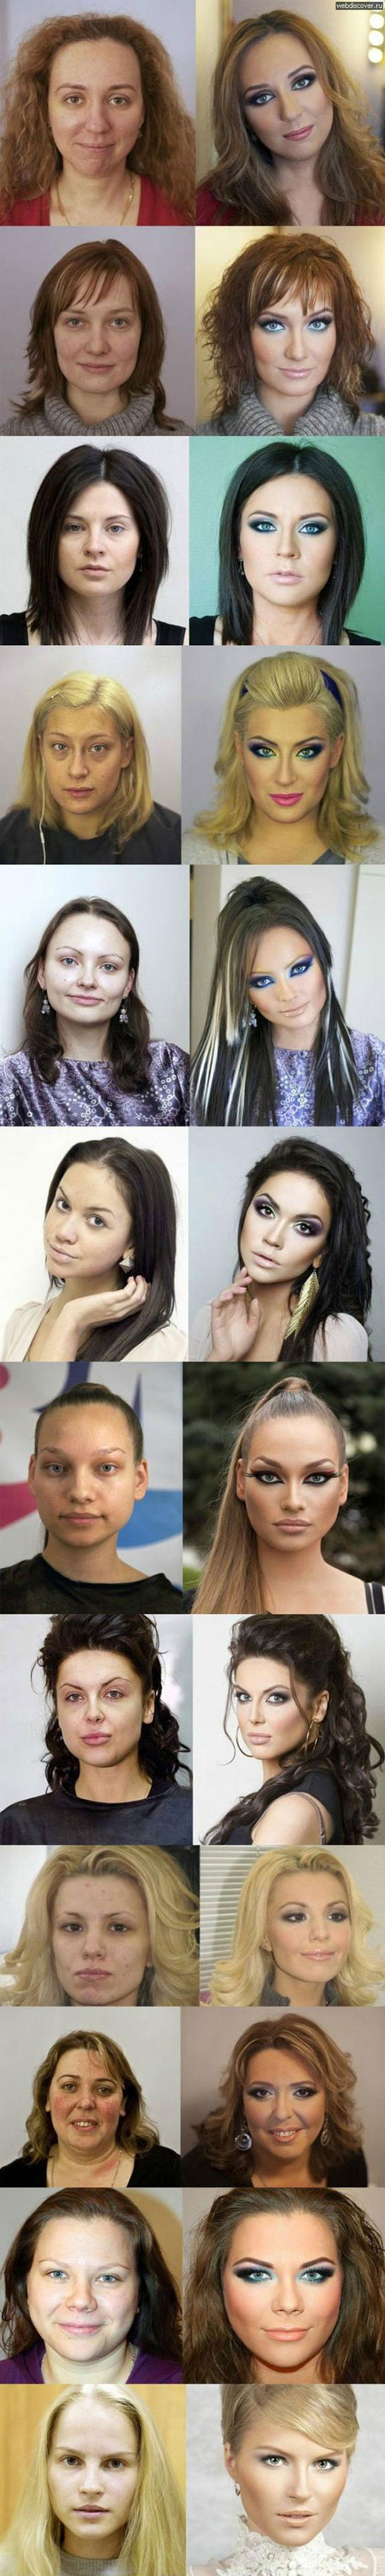 evil-makeup